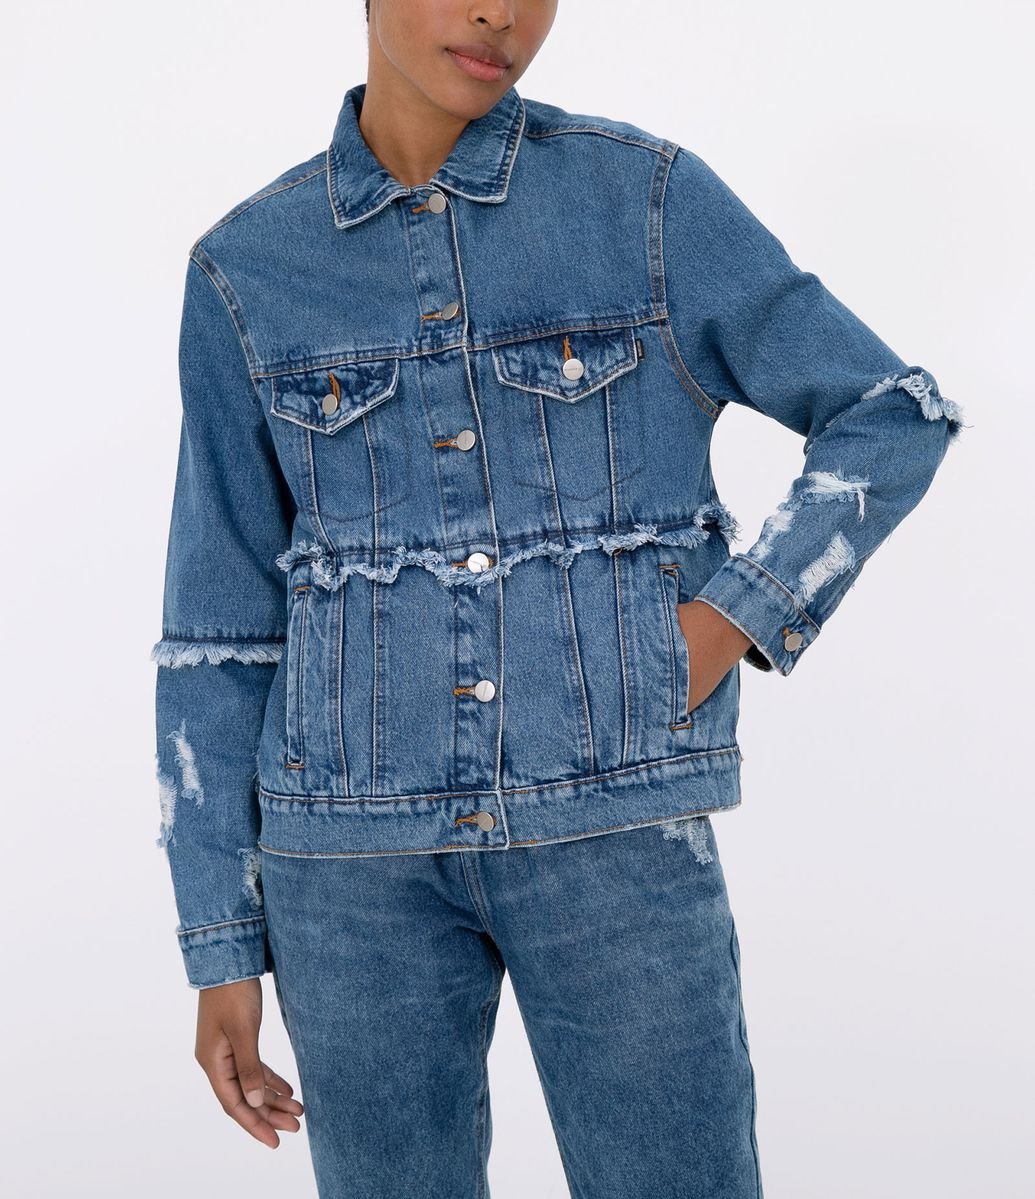 renner jaqueta jeans masculina